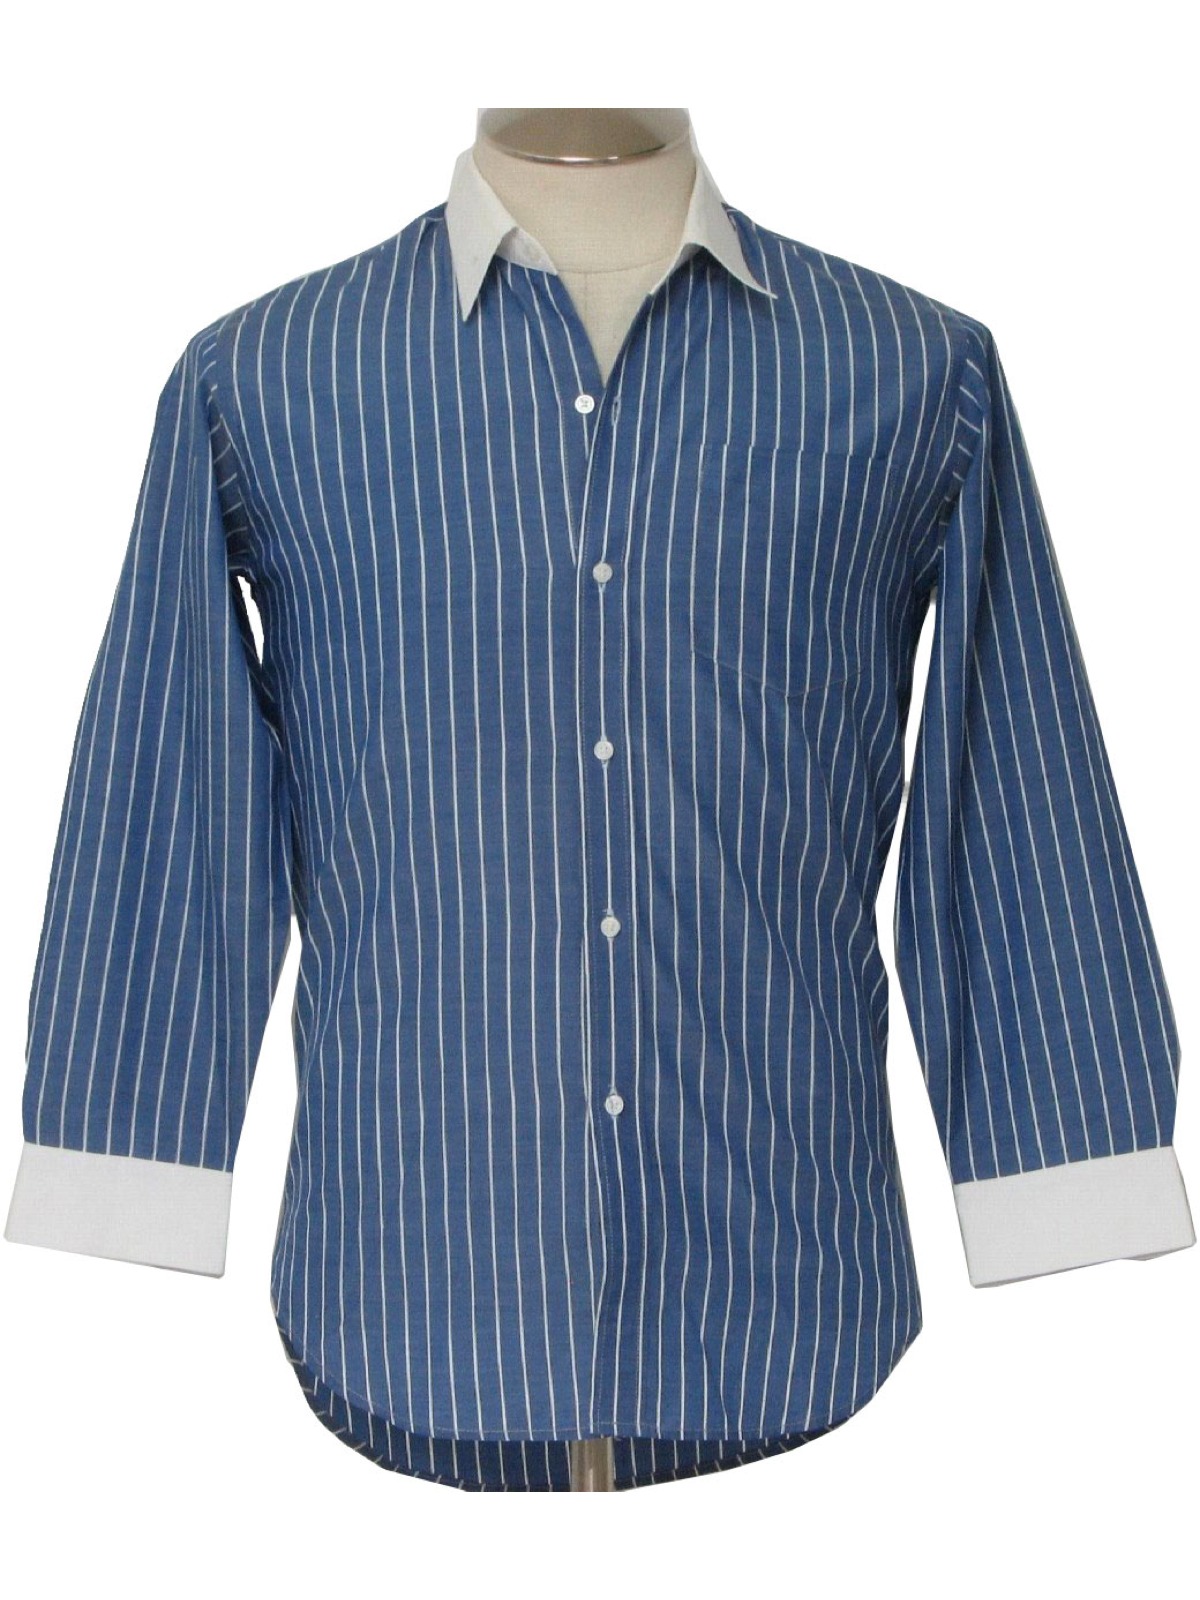 blue dress shirt with white stripes